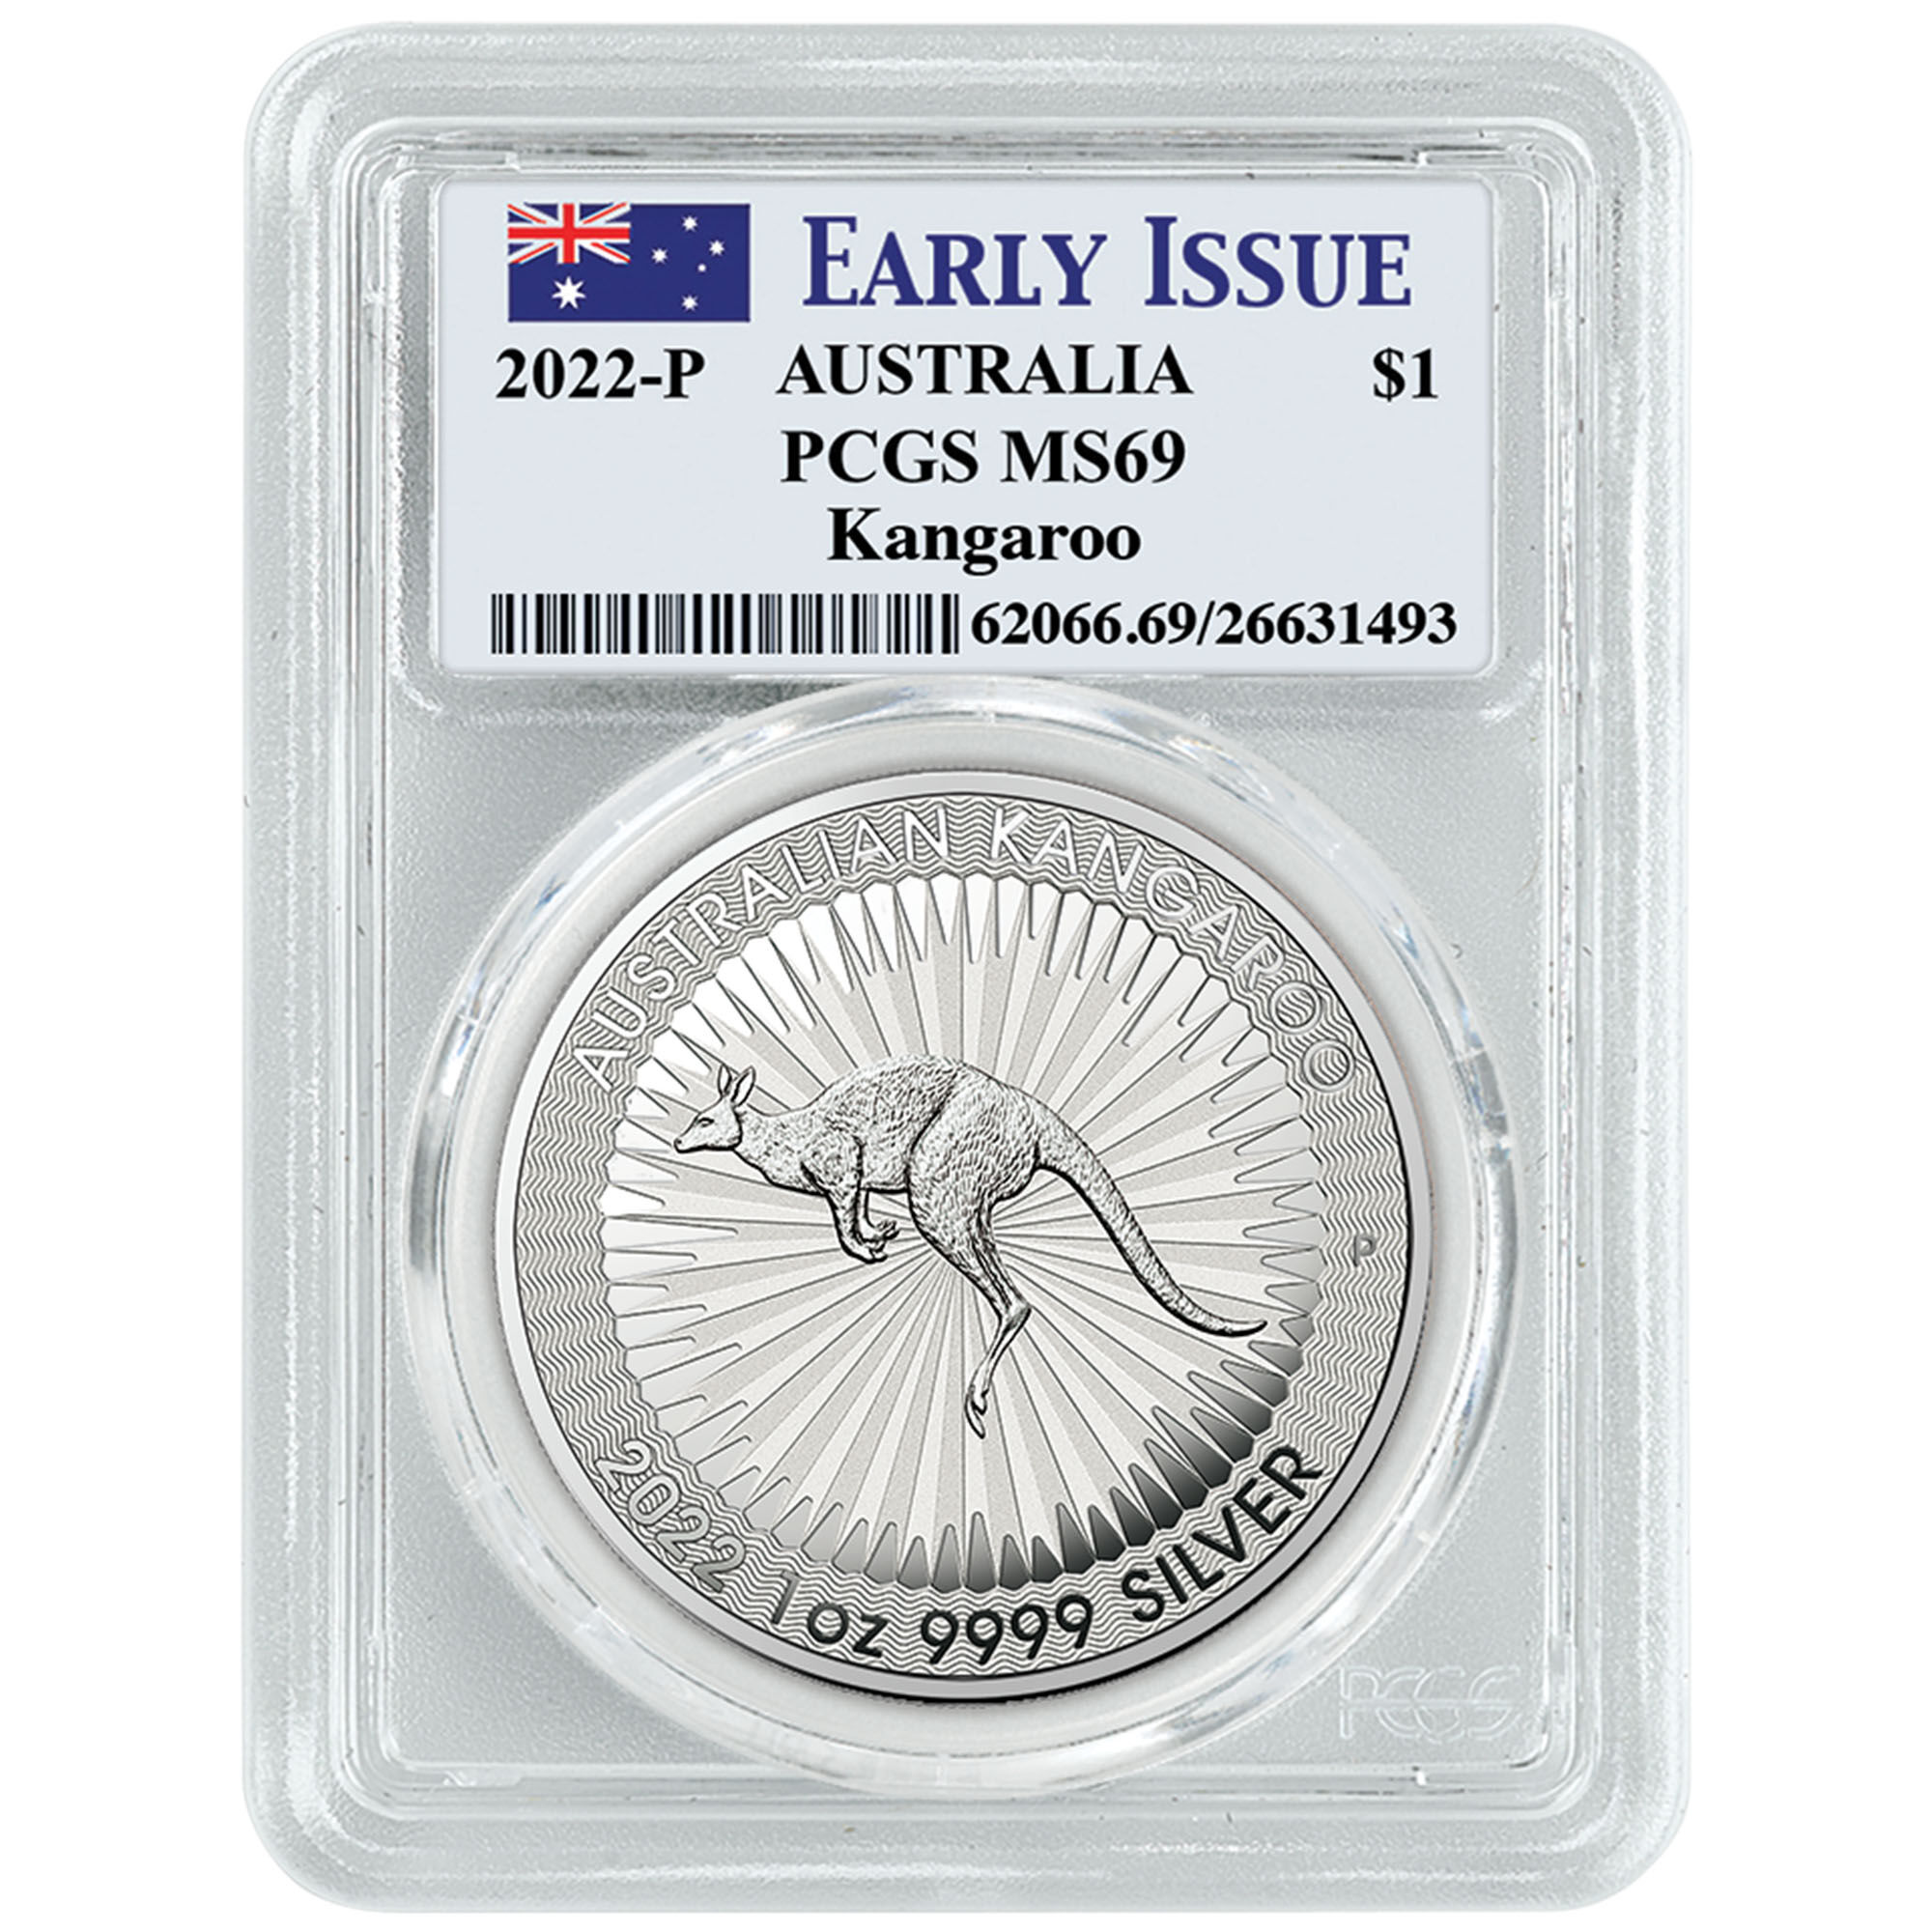 2022 early issue australian silver dollar A22 a Main